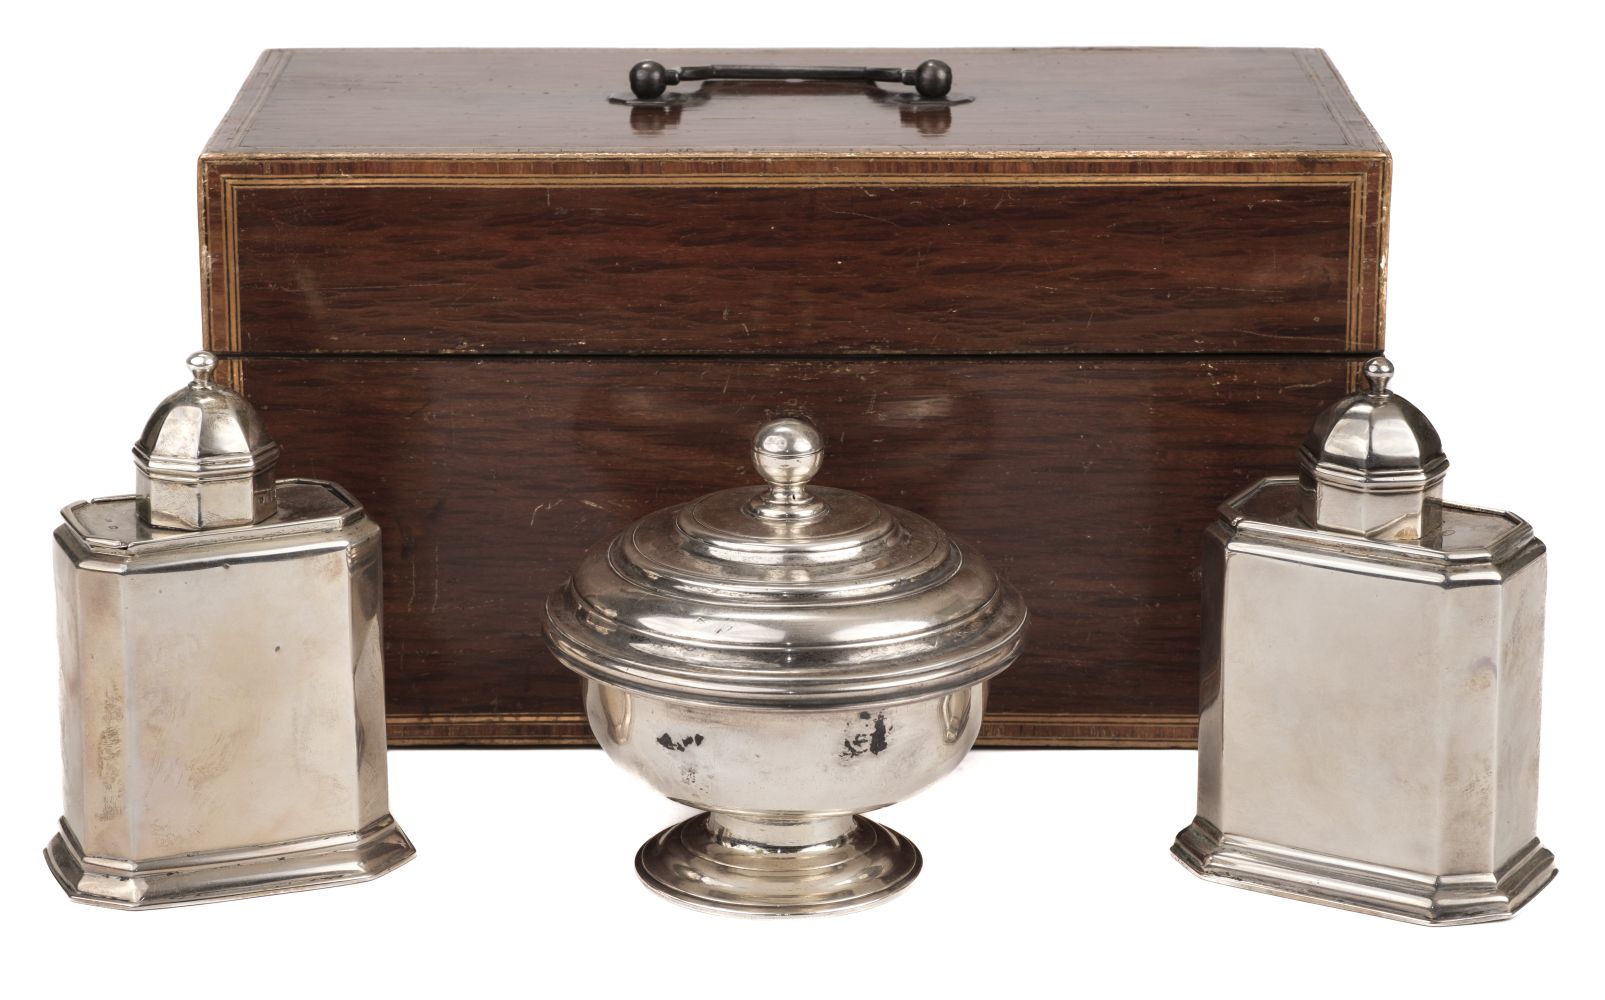 Silver Tea Caddy Set. A composed 18th century silver tea caddy set